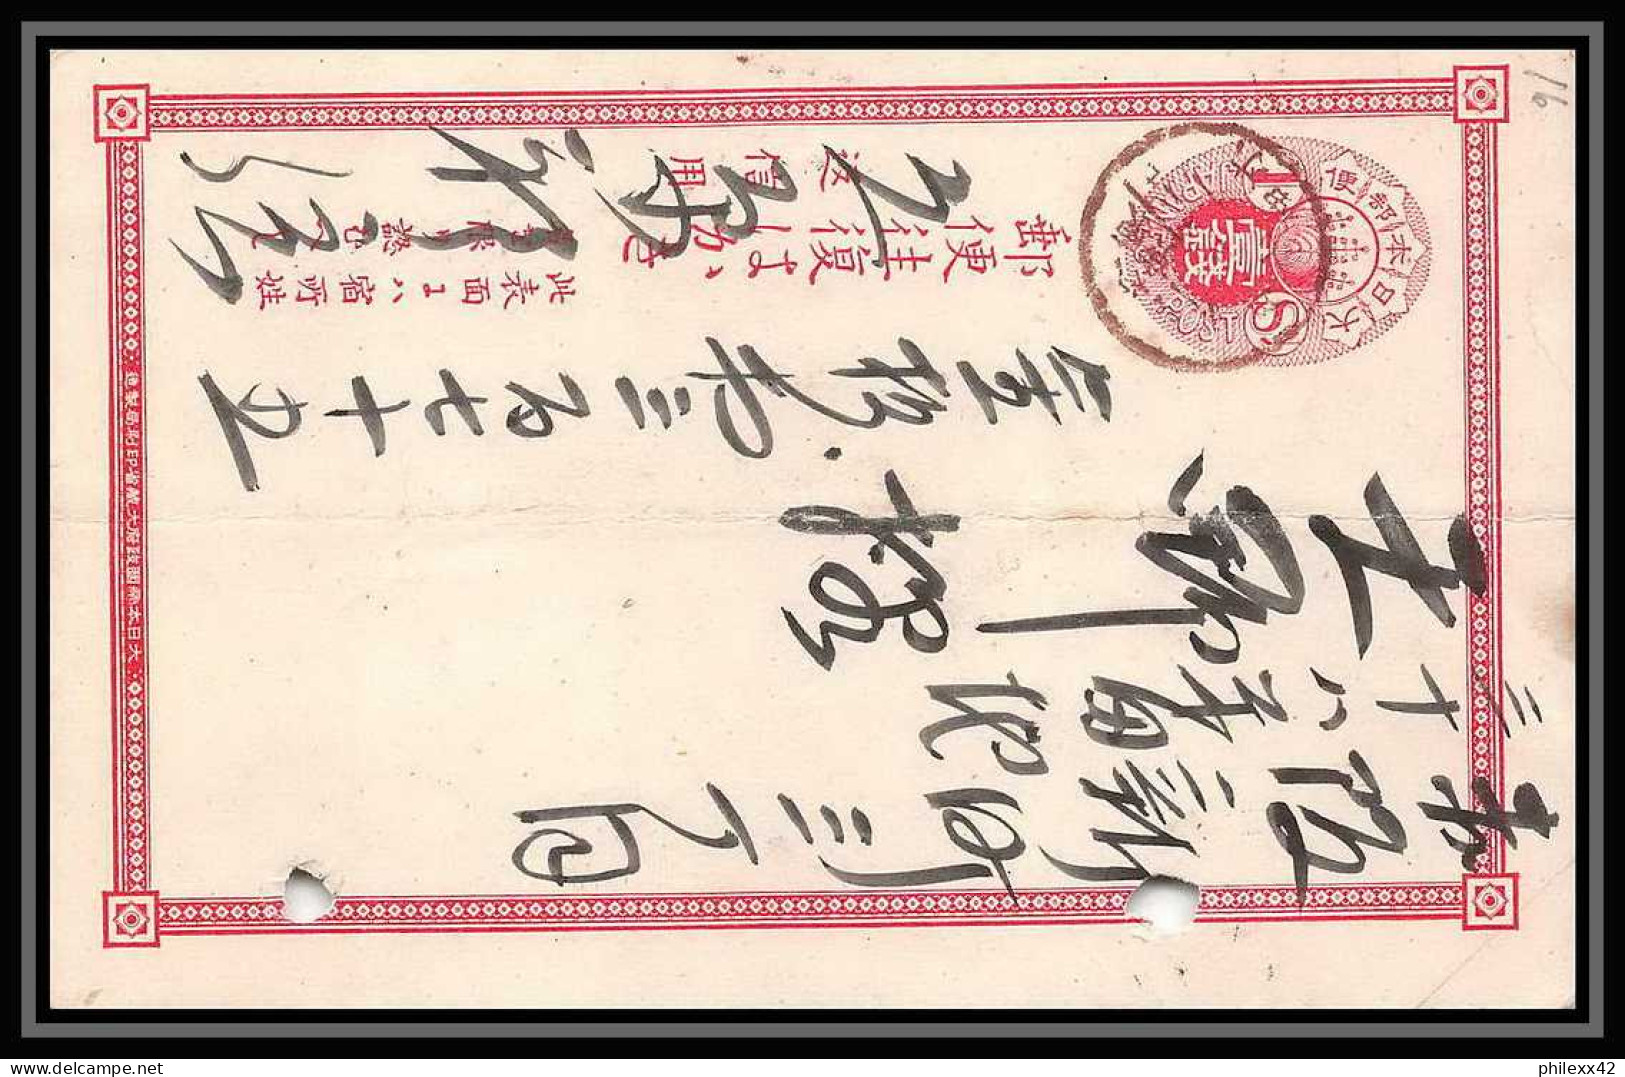 2054/ Japon (Japan) Lot De 12 Entiers Stationery Carte Postale (postcard) 1 Sen Red Type 1885 1  - Cartes Postales